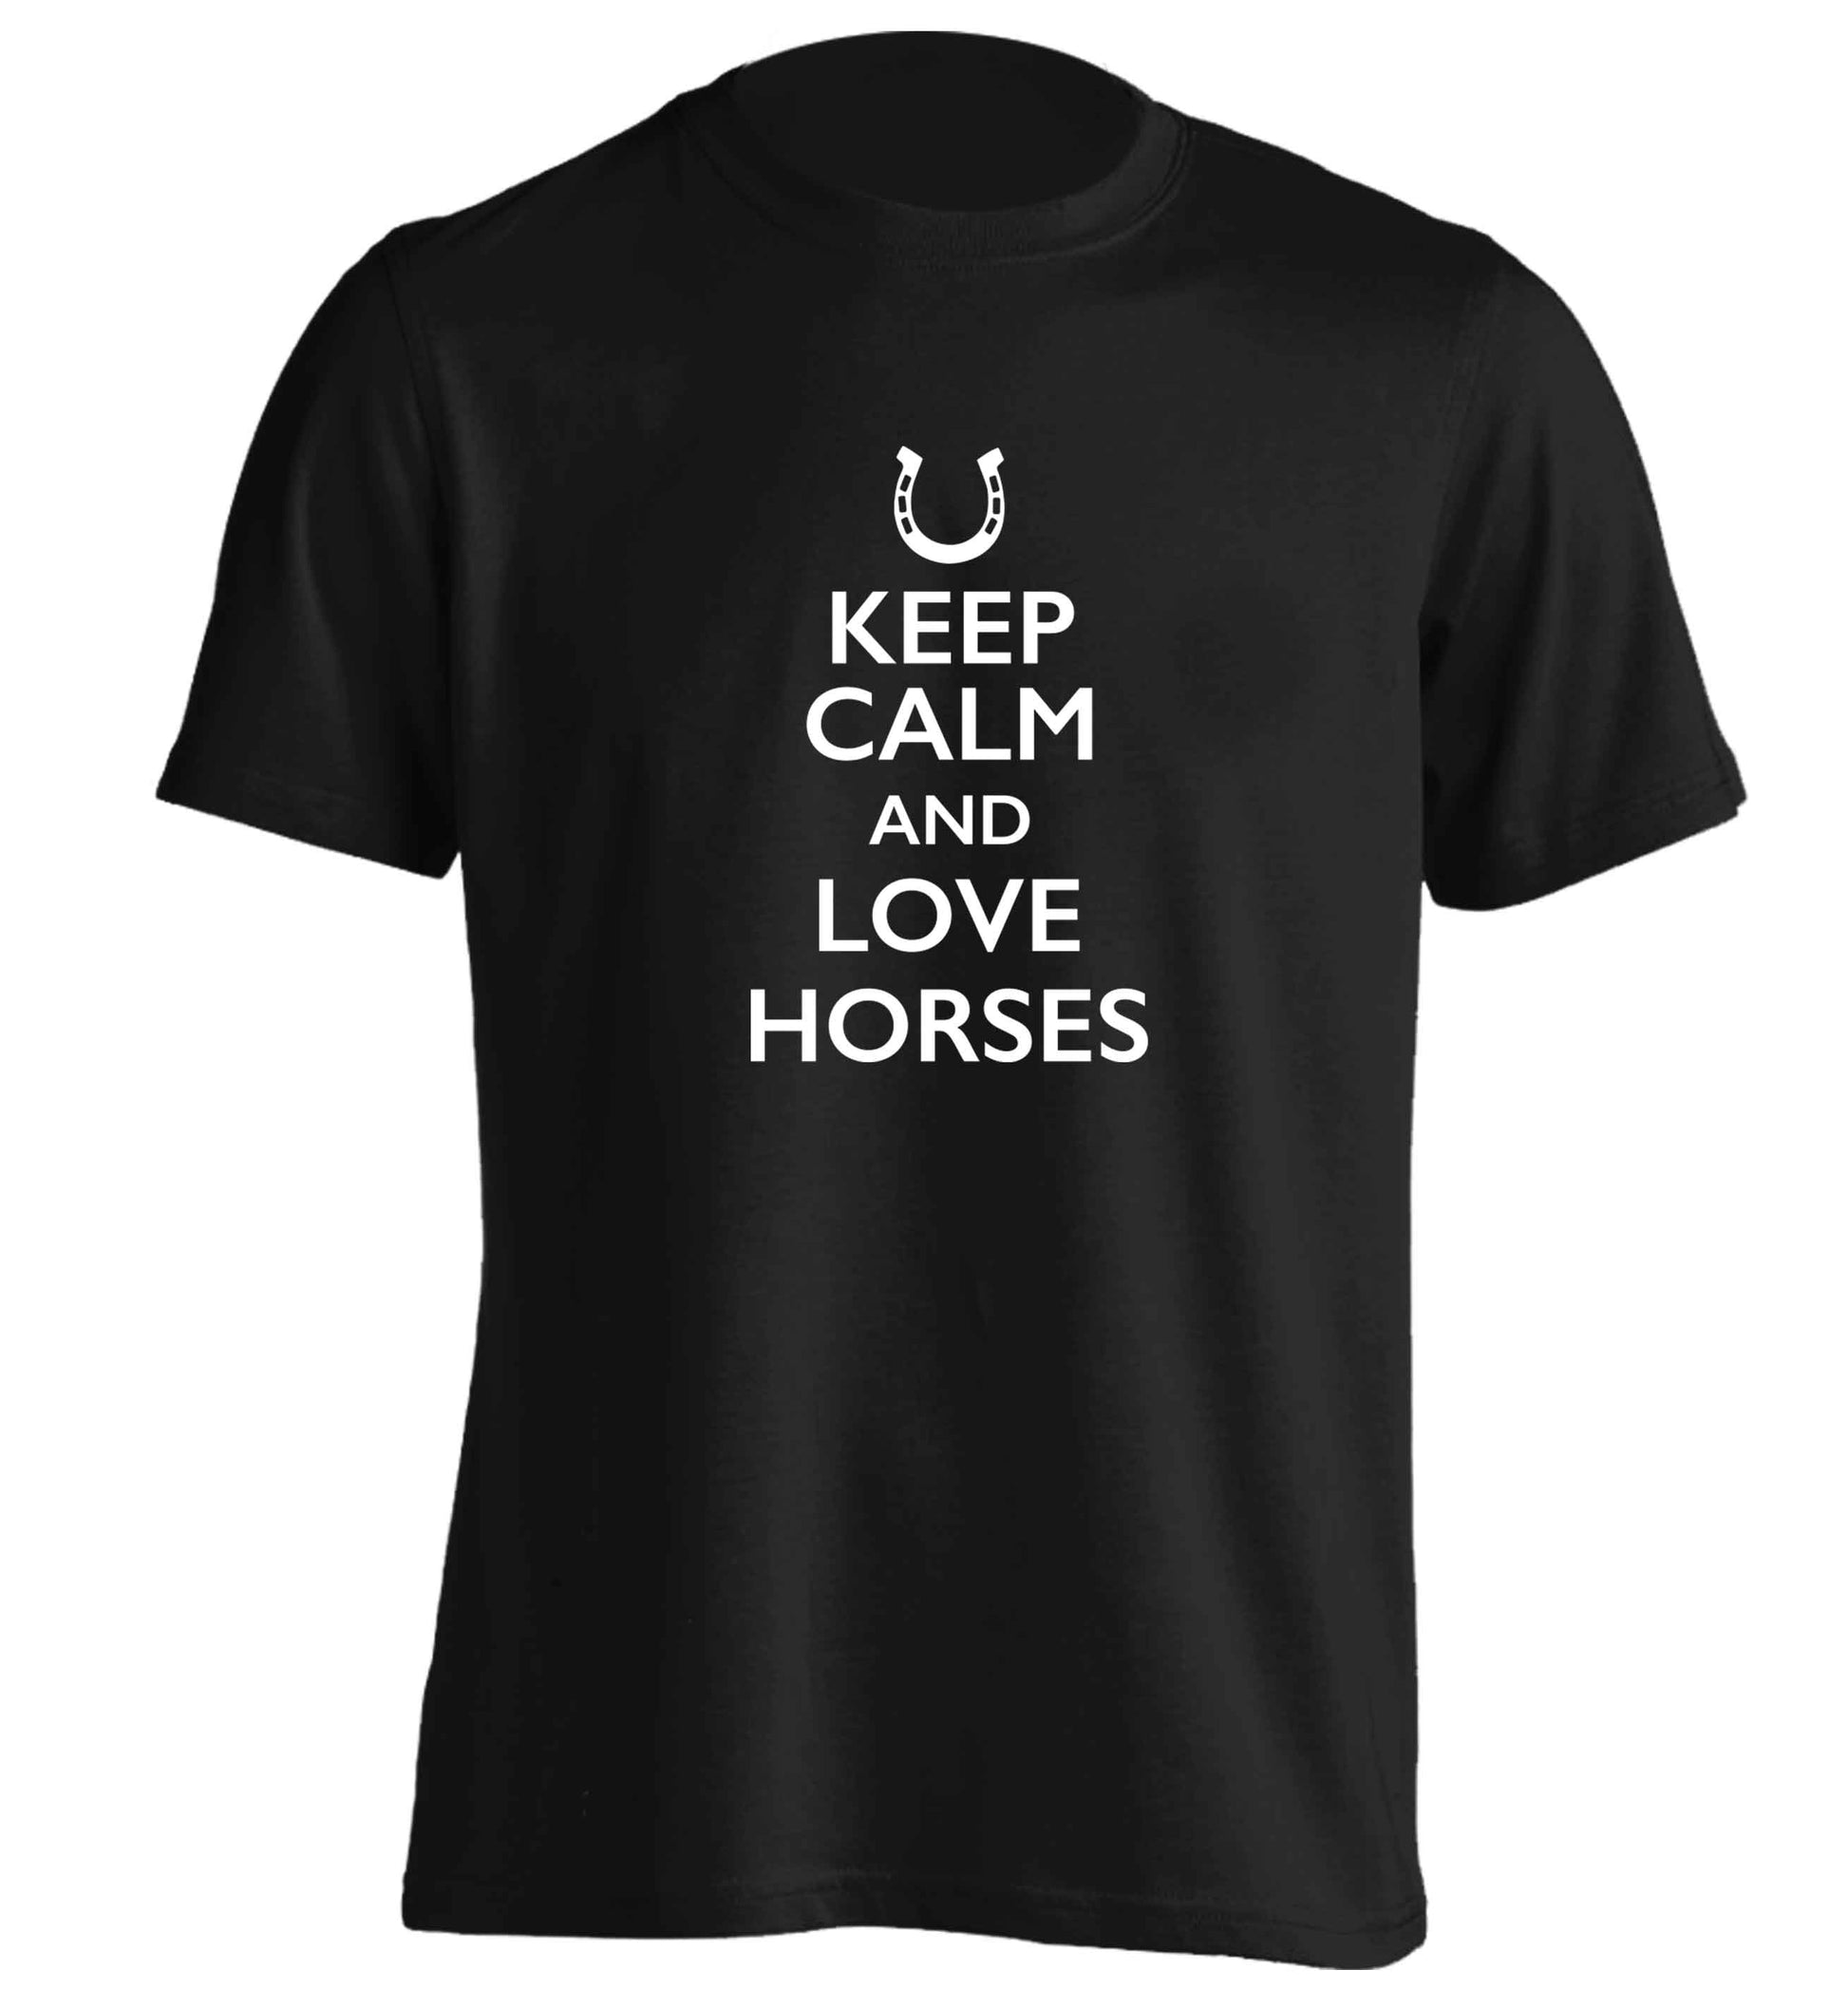 Keep calm and love horses adults unisex black Tshirt 2XL